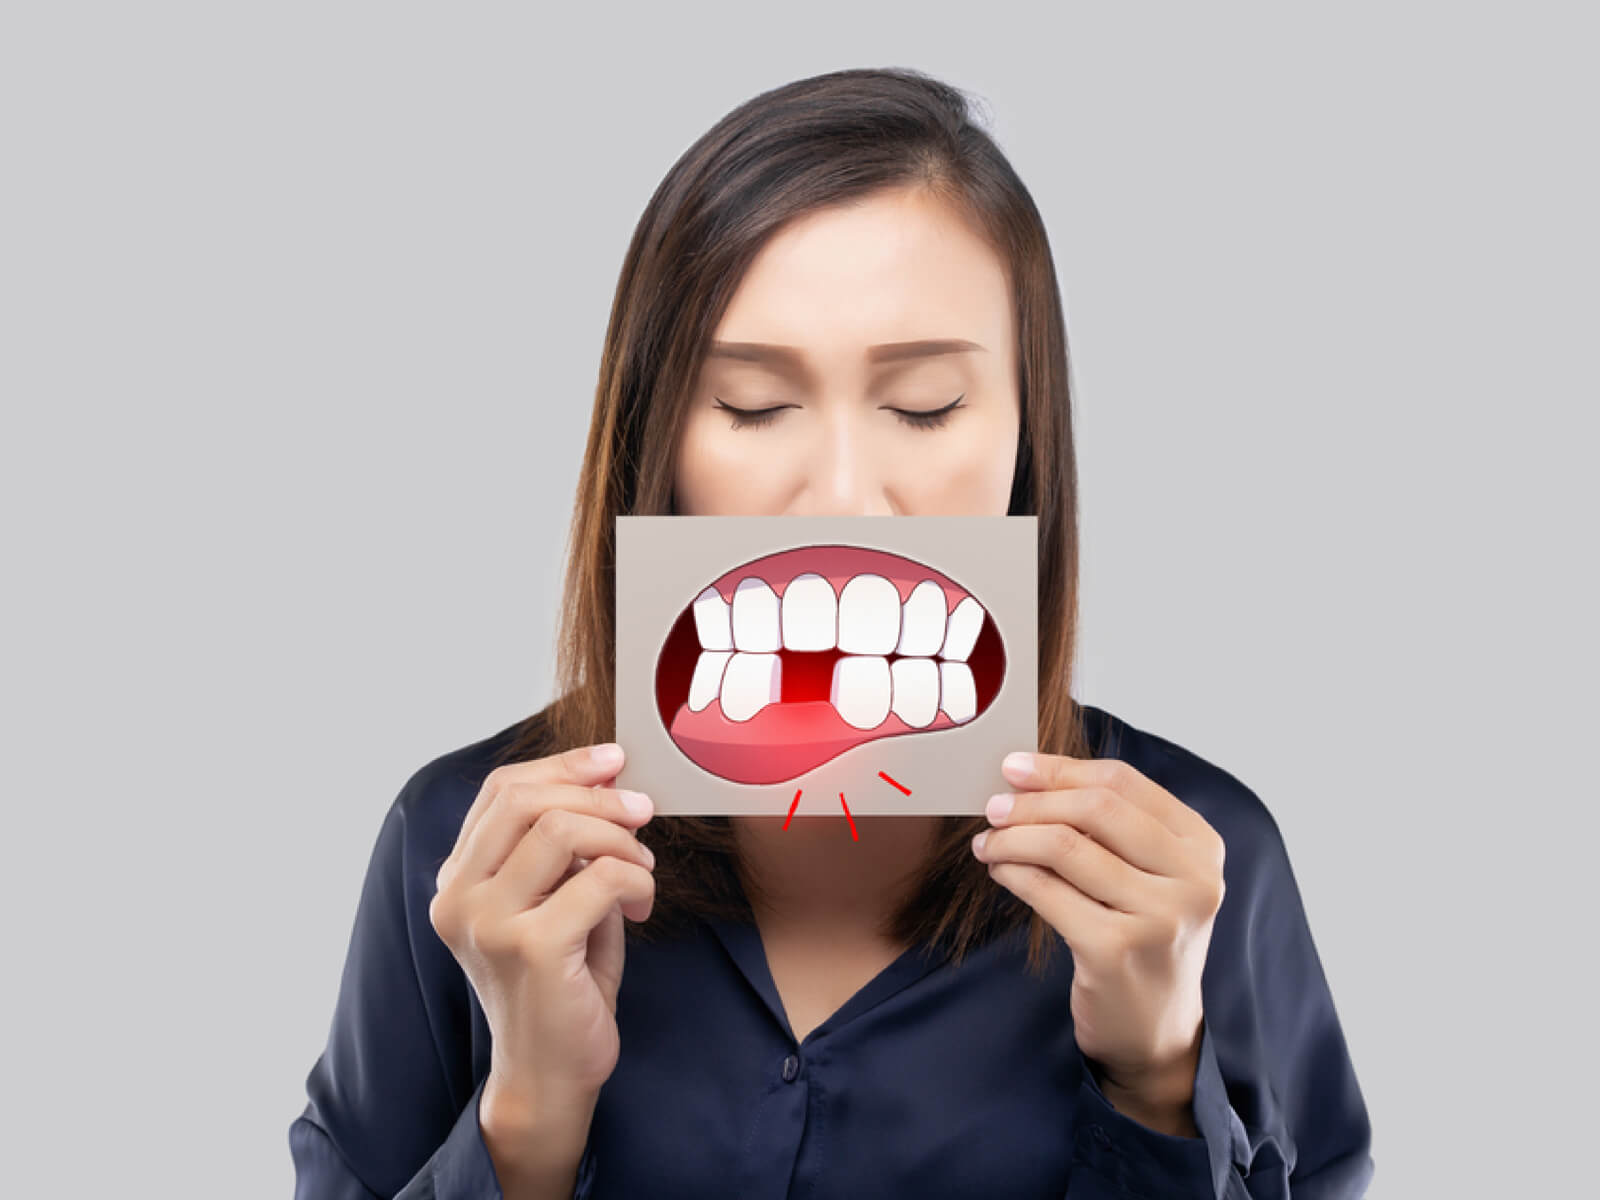 Can Broken Teeth Cause Health Problems?